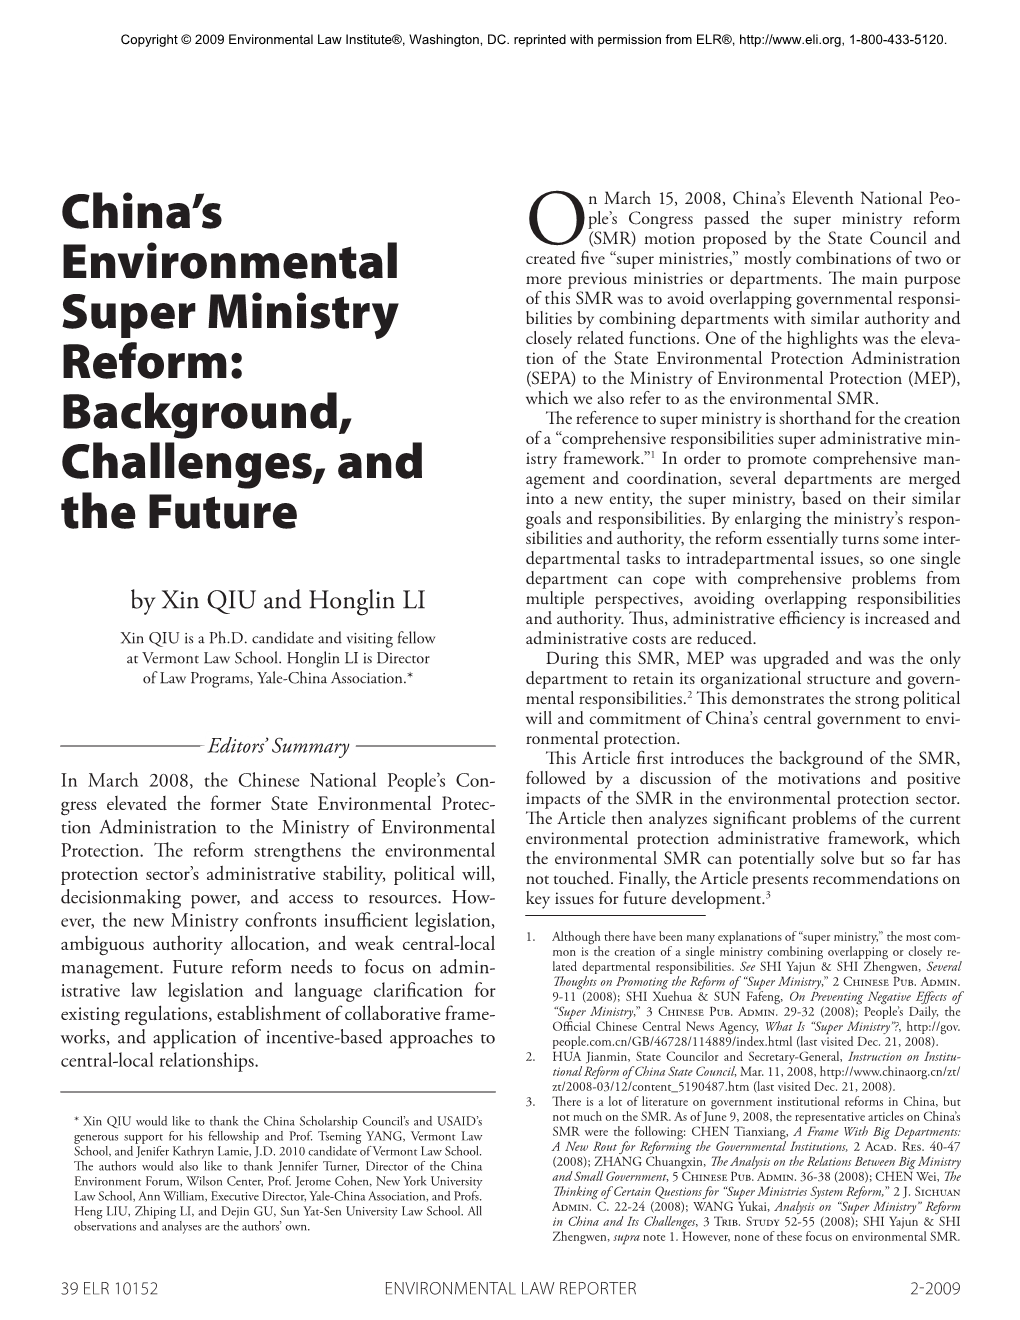 China's Environmental Super Ministry Reform